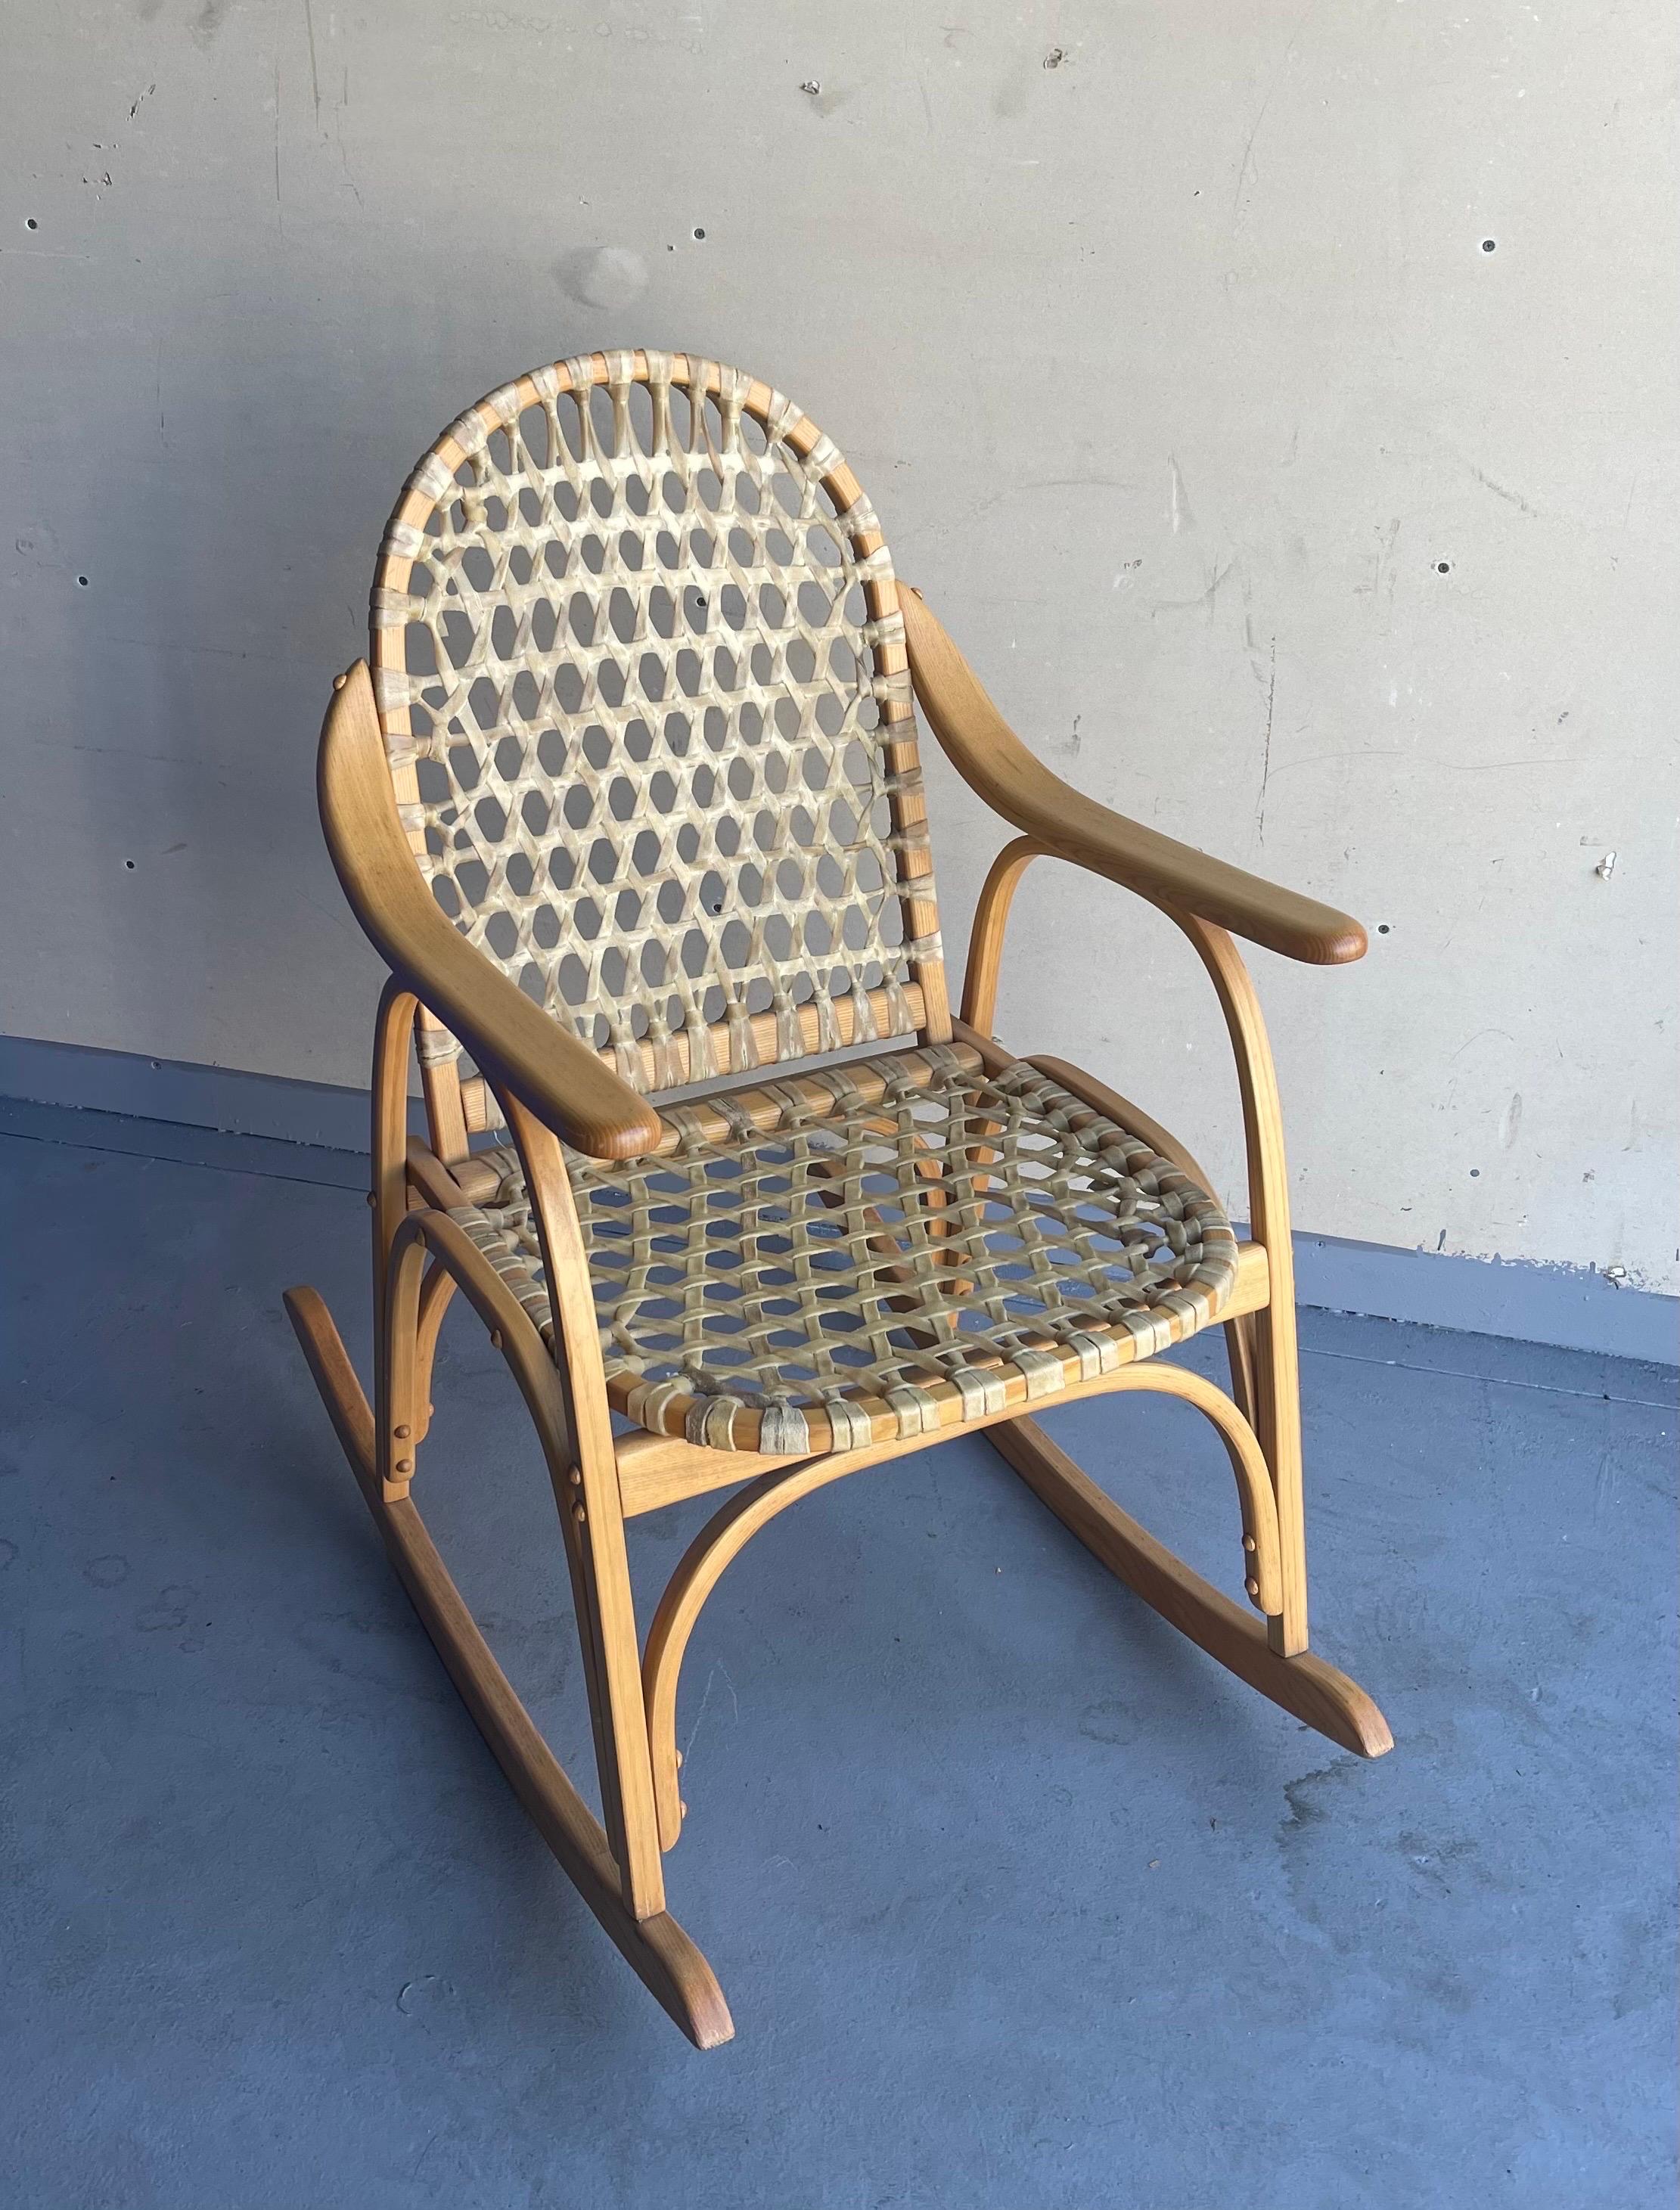 snowshoe chair